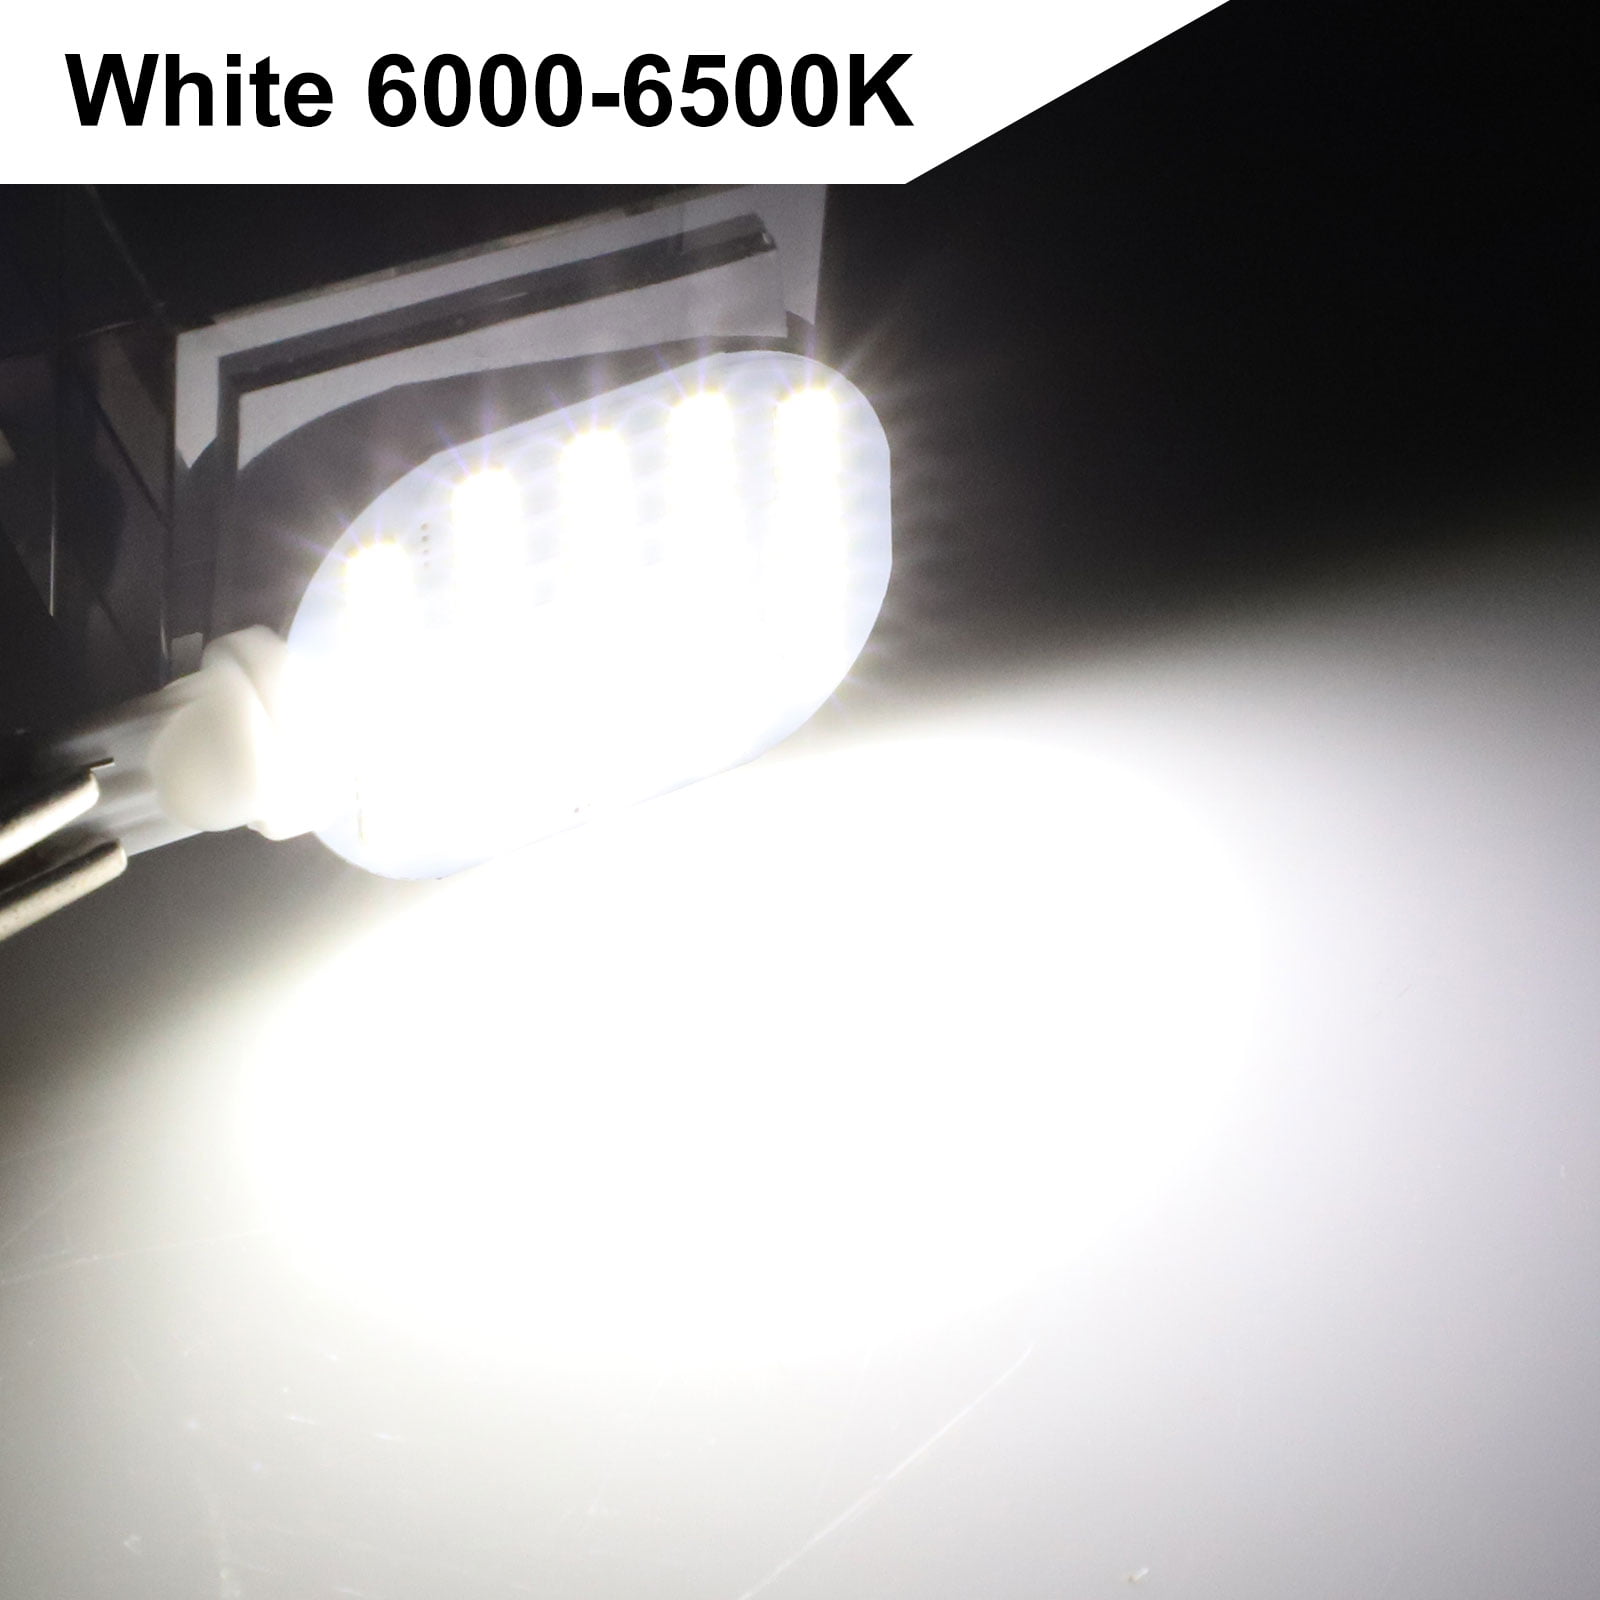 6000-6500K Color Temperature Super Bright 921 LED Bulbs for RV Indoor Lights Camper Trailer Motorhome Marine Boat Dome Interior Light Pack of 20, 6000K White Pack of 10, Super White 